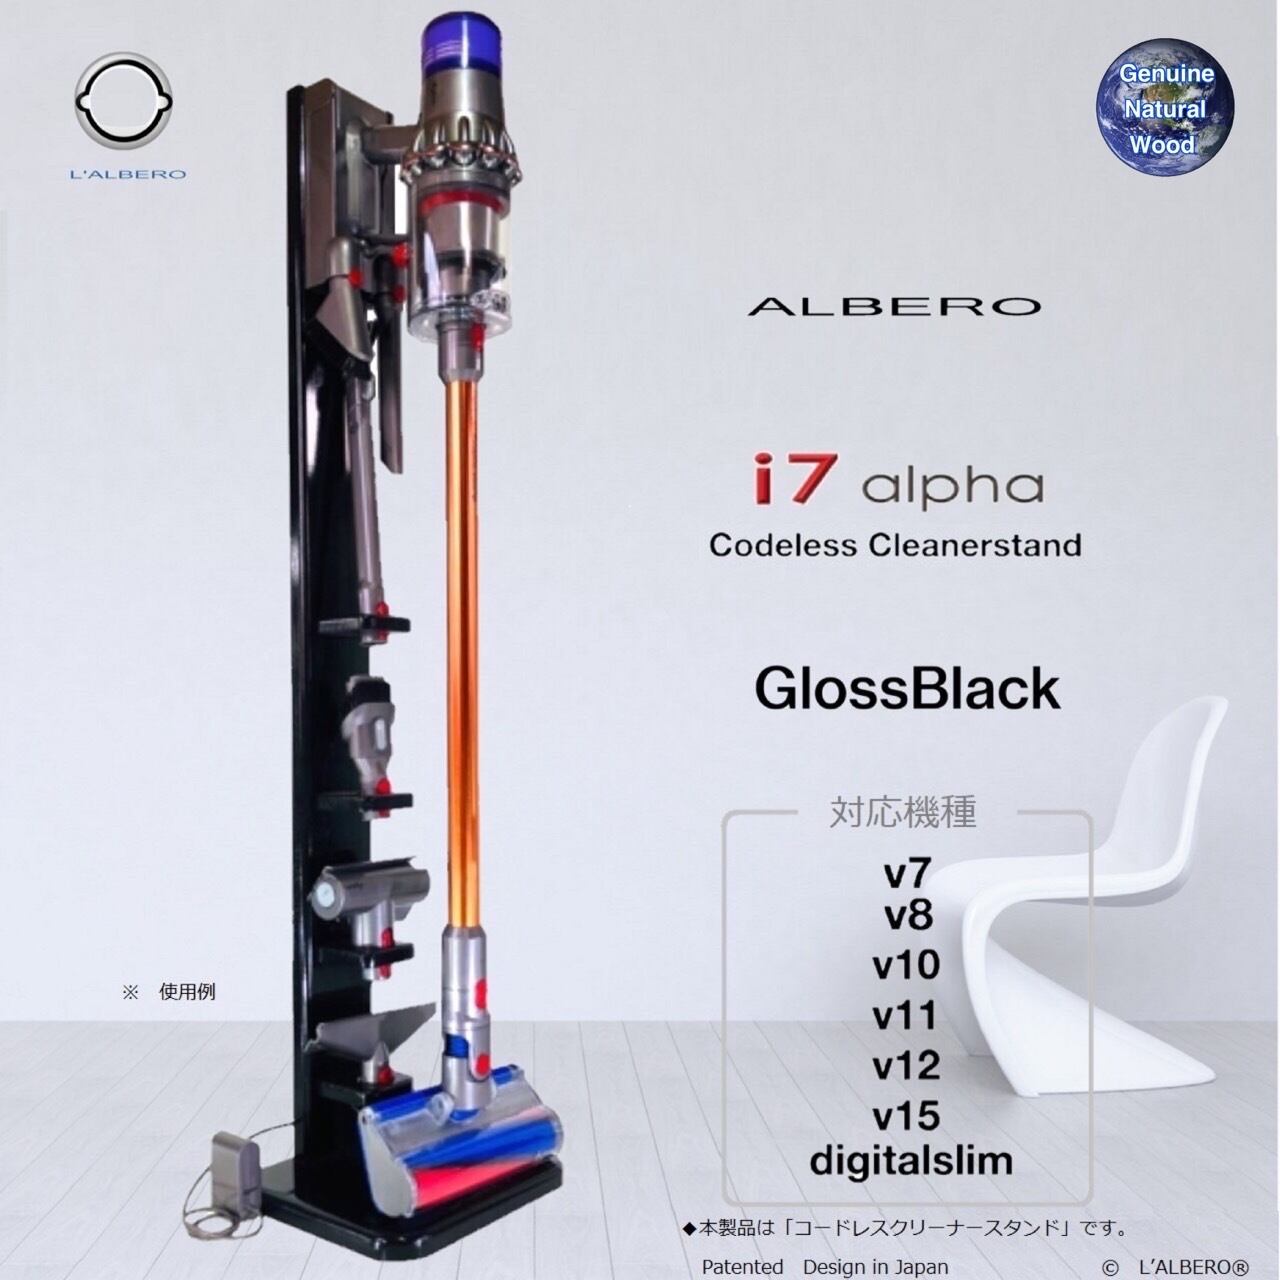 ALBERO i7 alpha】【ダイソン専用スタンド】【Gross black】【ALR